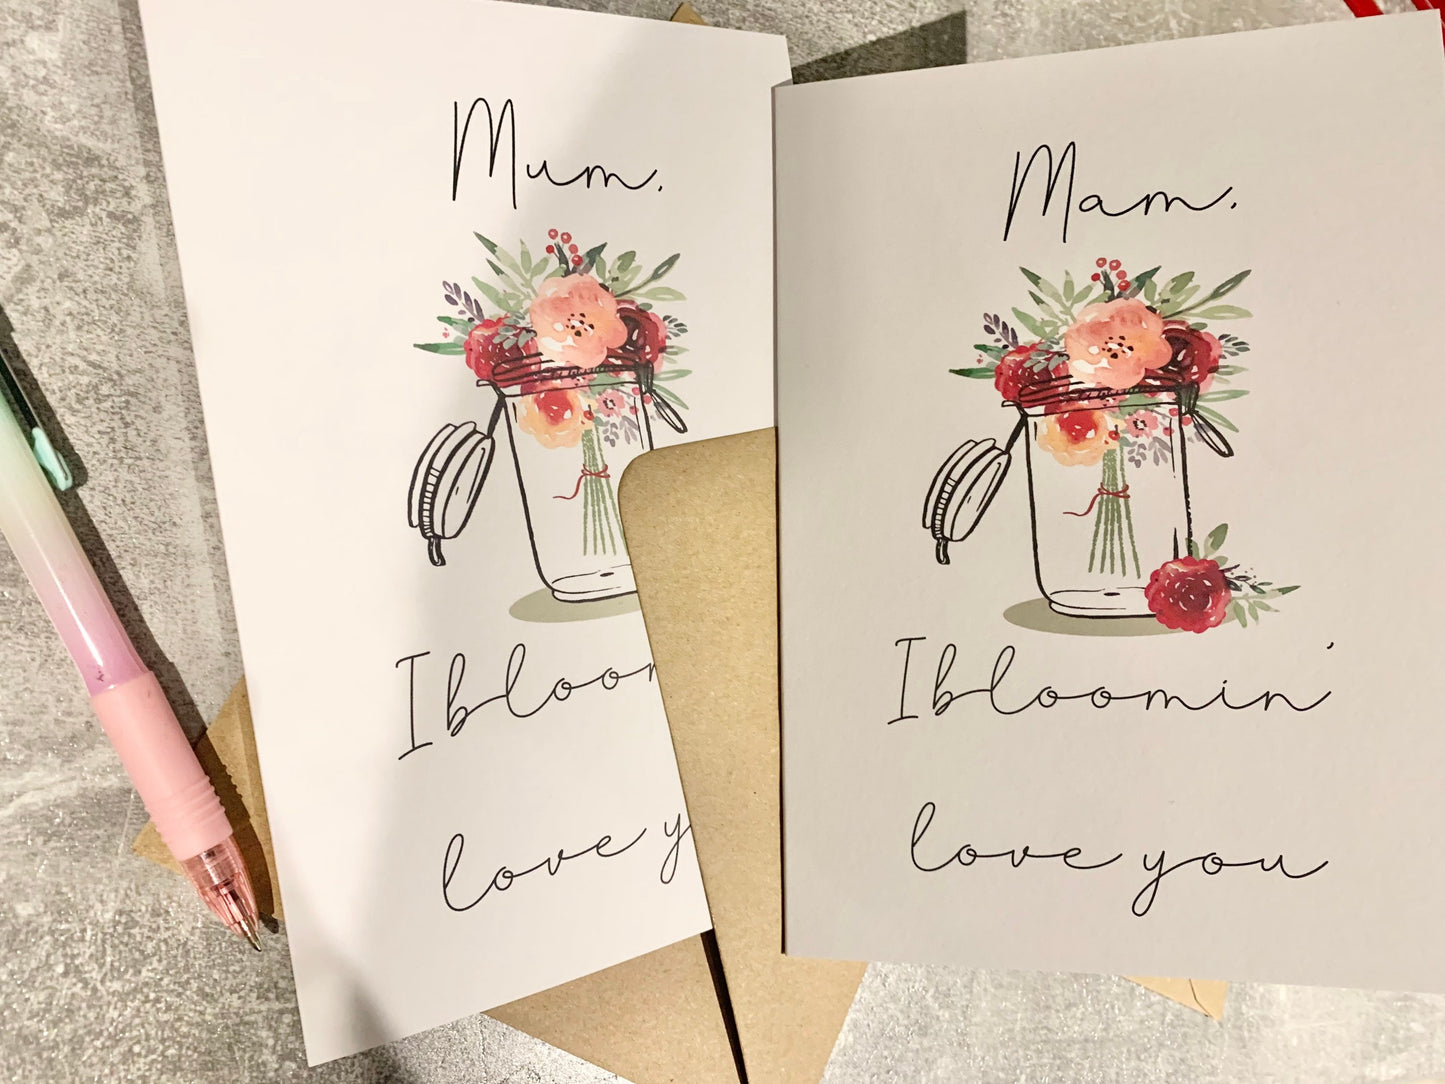 Mum birthday card, mom cards, floral blooming card, love you mum cards for mom birthday, flower design card, grandma greeting cards,